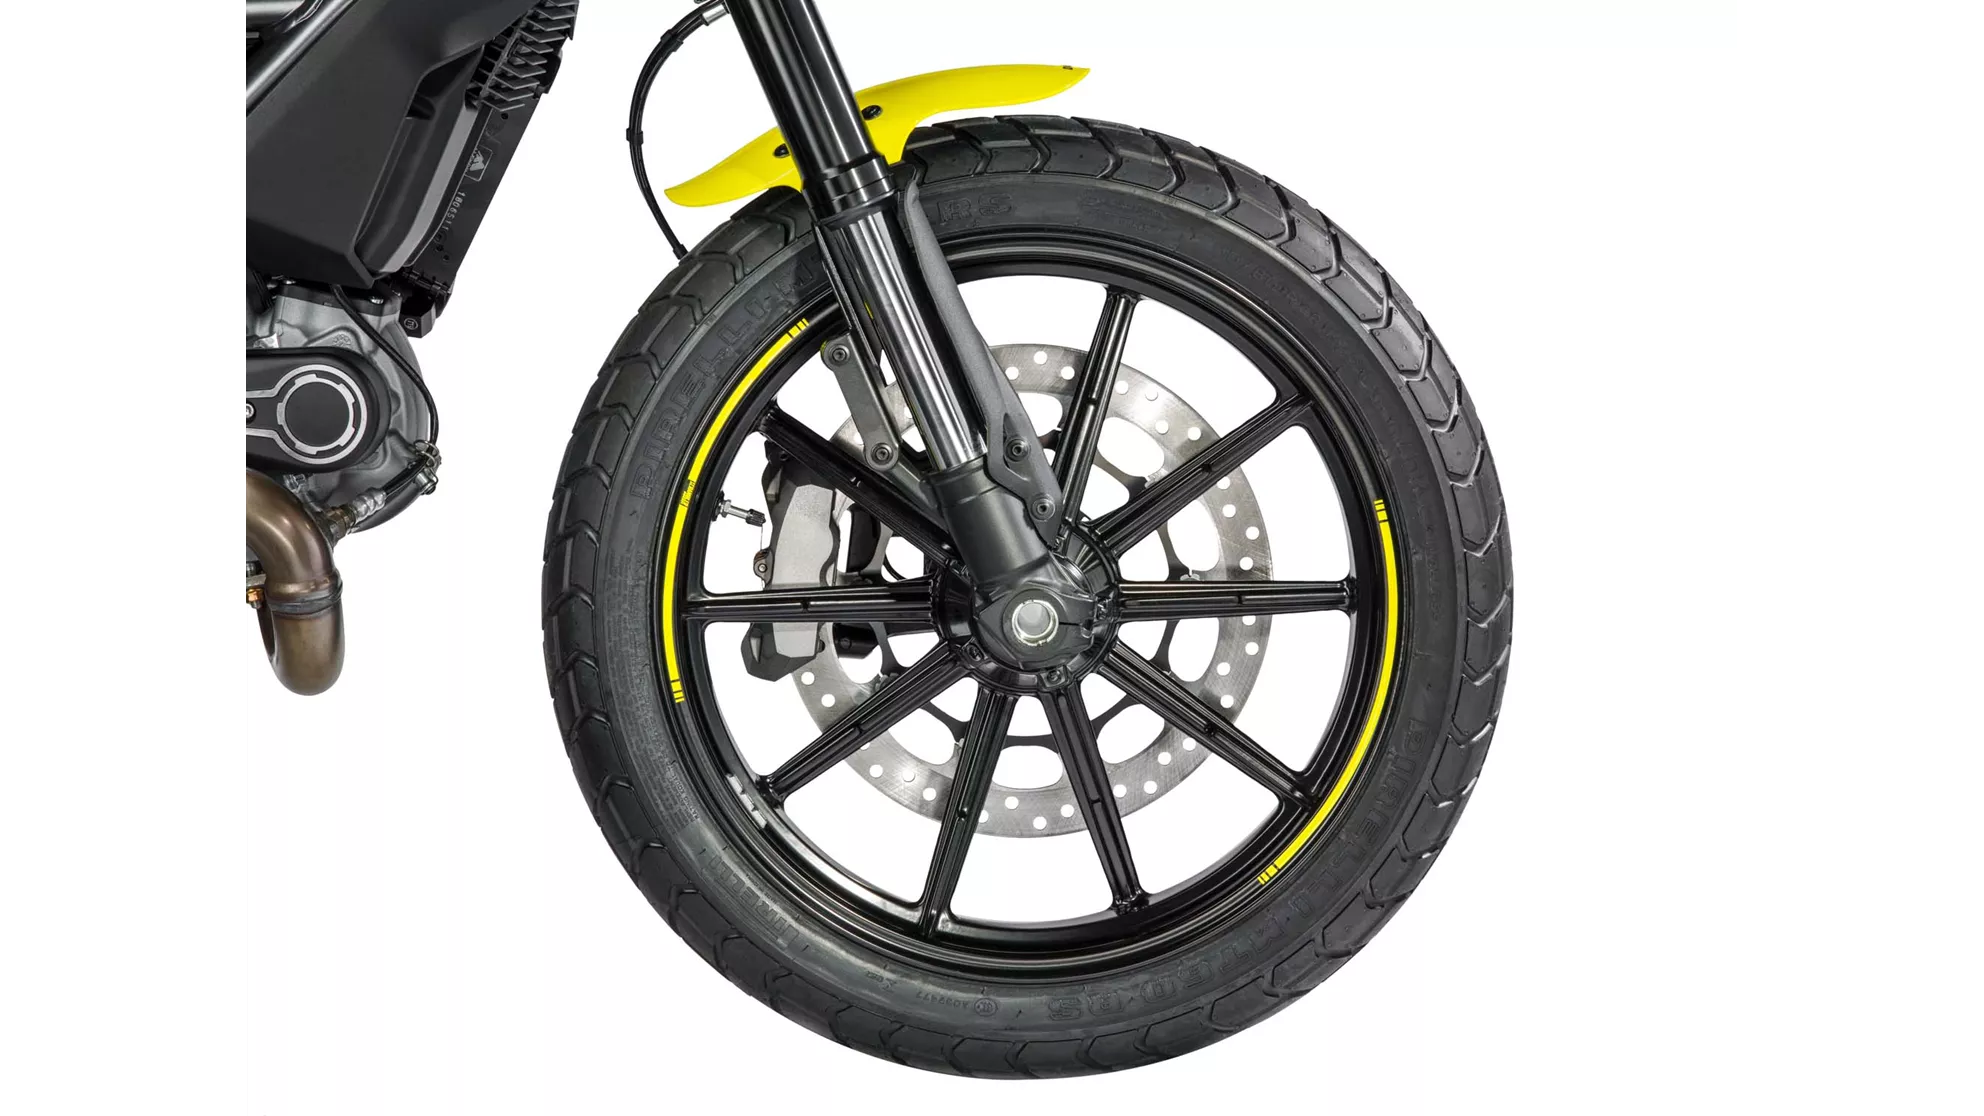 Ducati Scrambler Flat Track Pro - Image 8